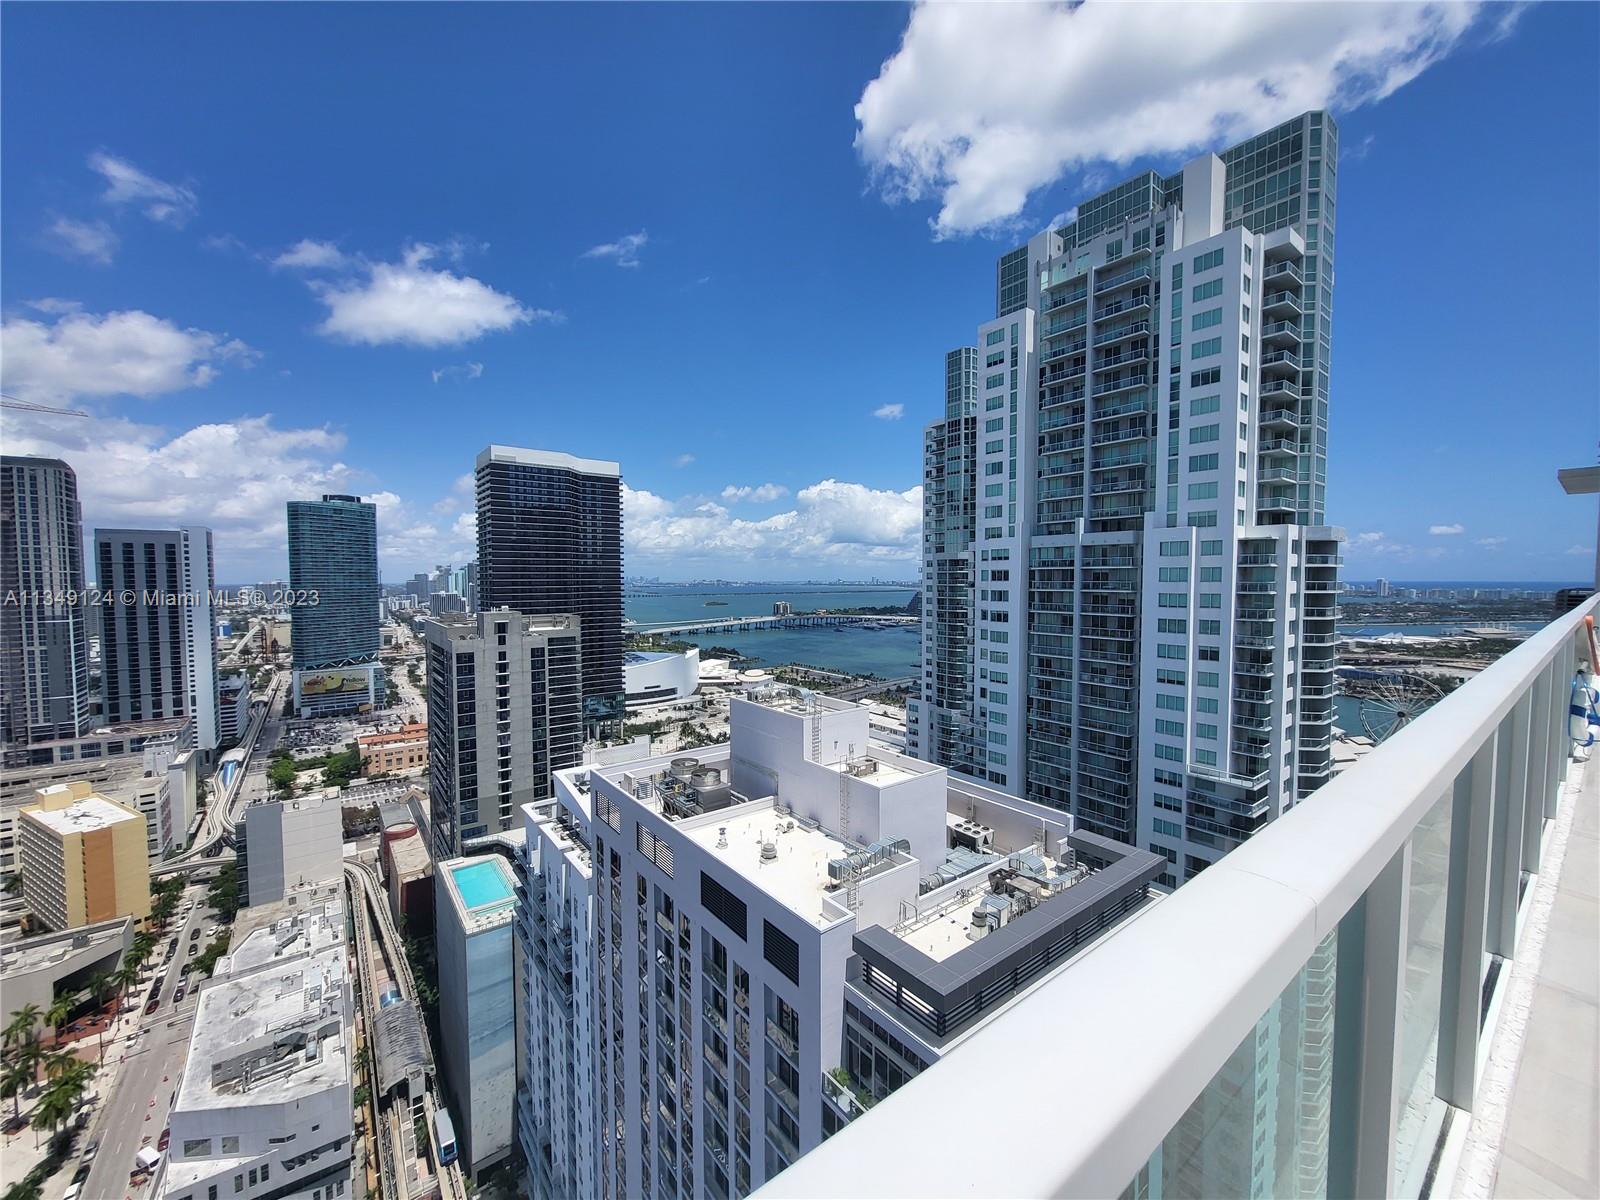 Photo 29 of Loft Downtown II Apt 2419 in Miami - MLS A11349124